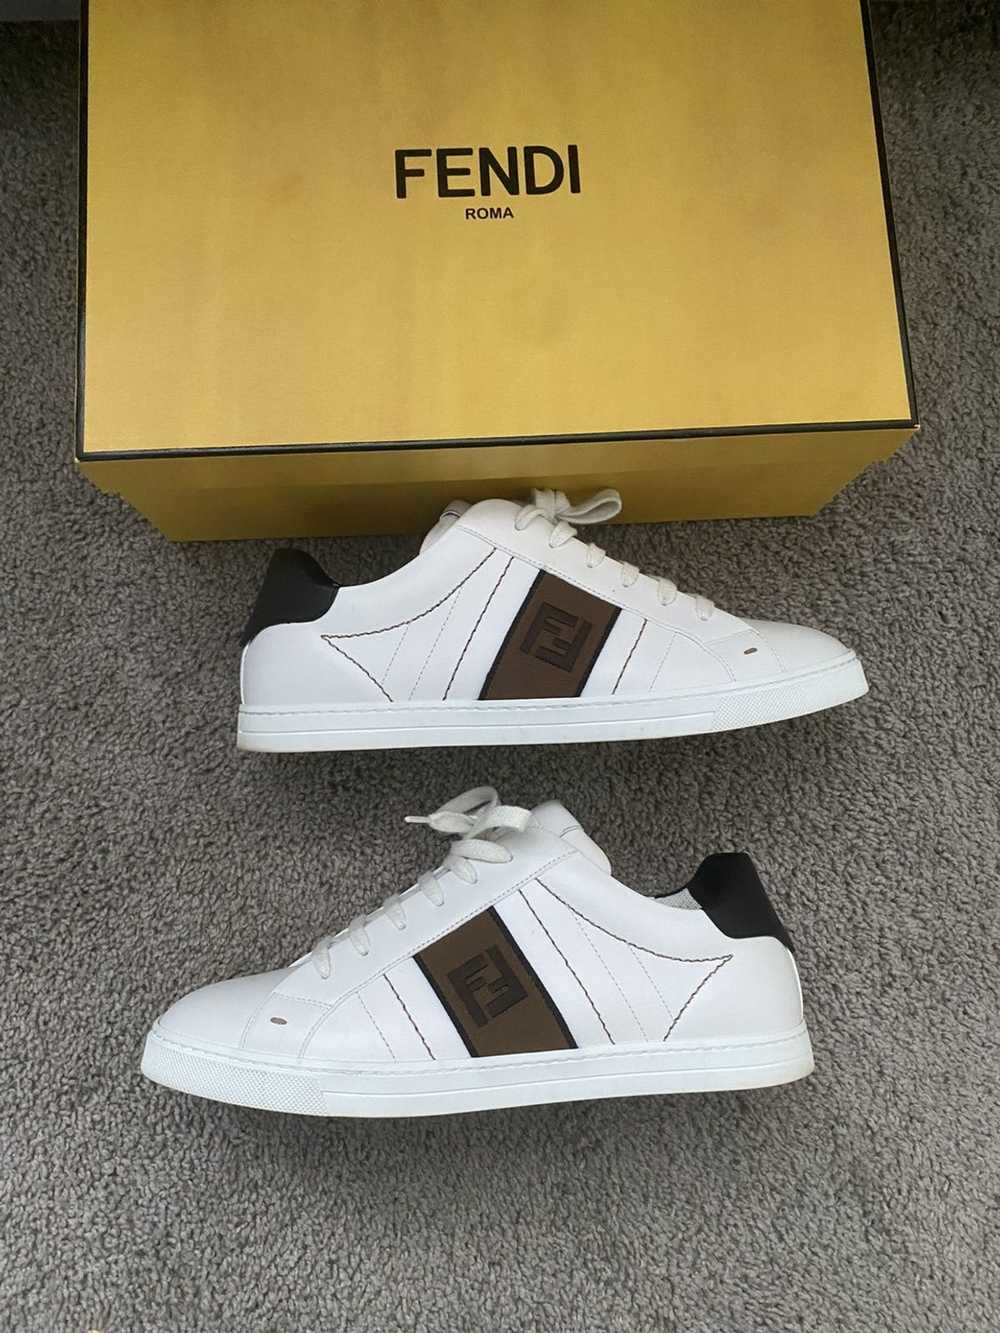 Fendi Fendi sneakers - image 1